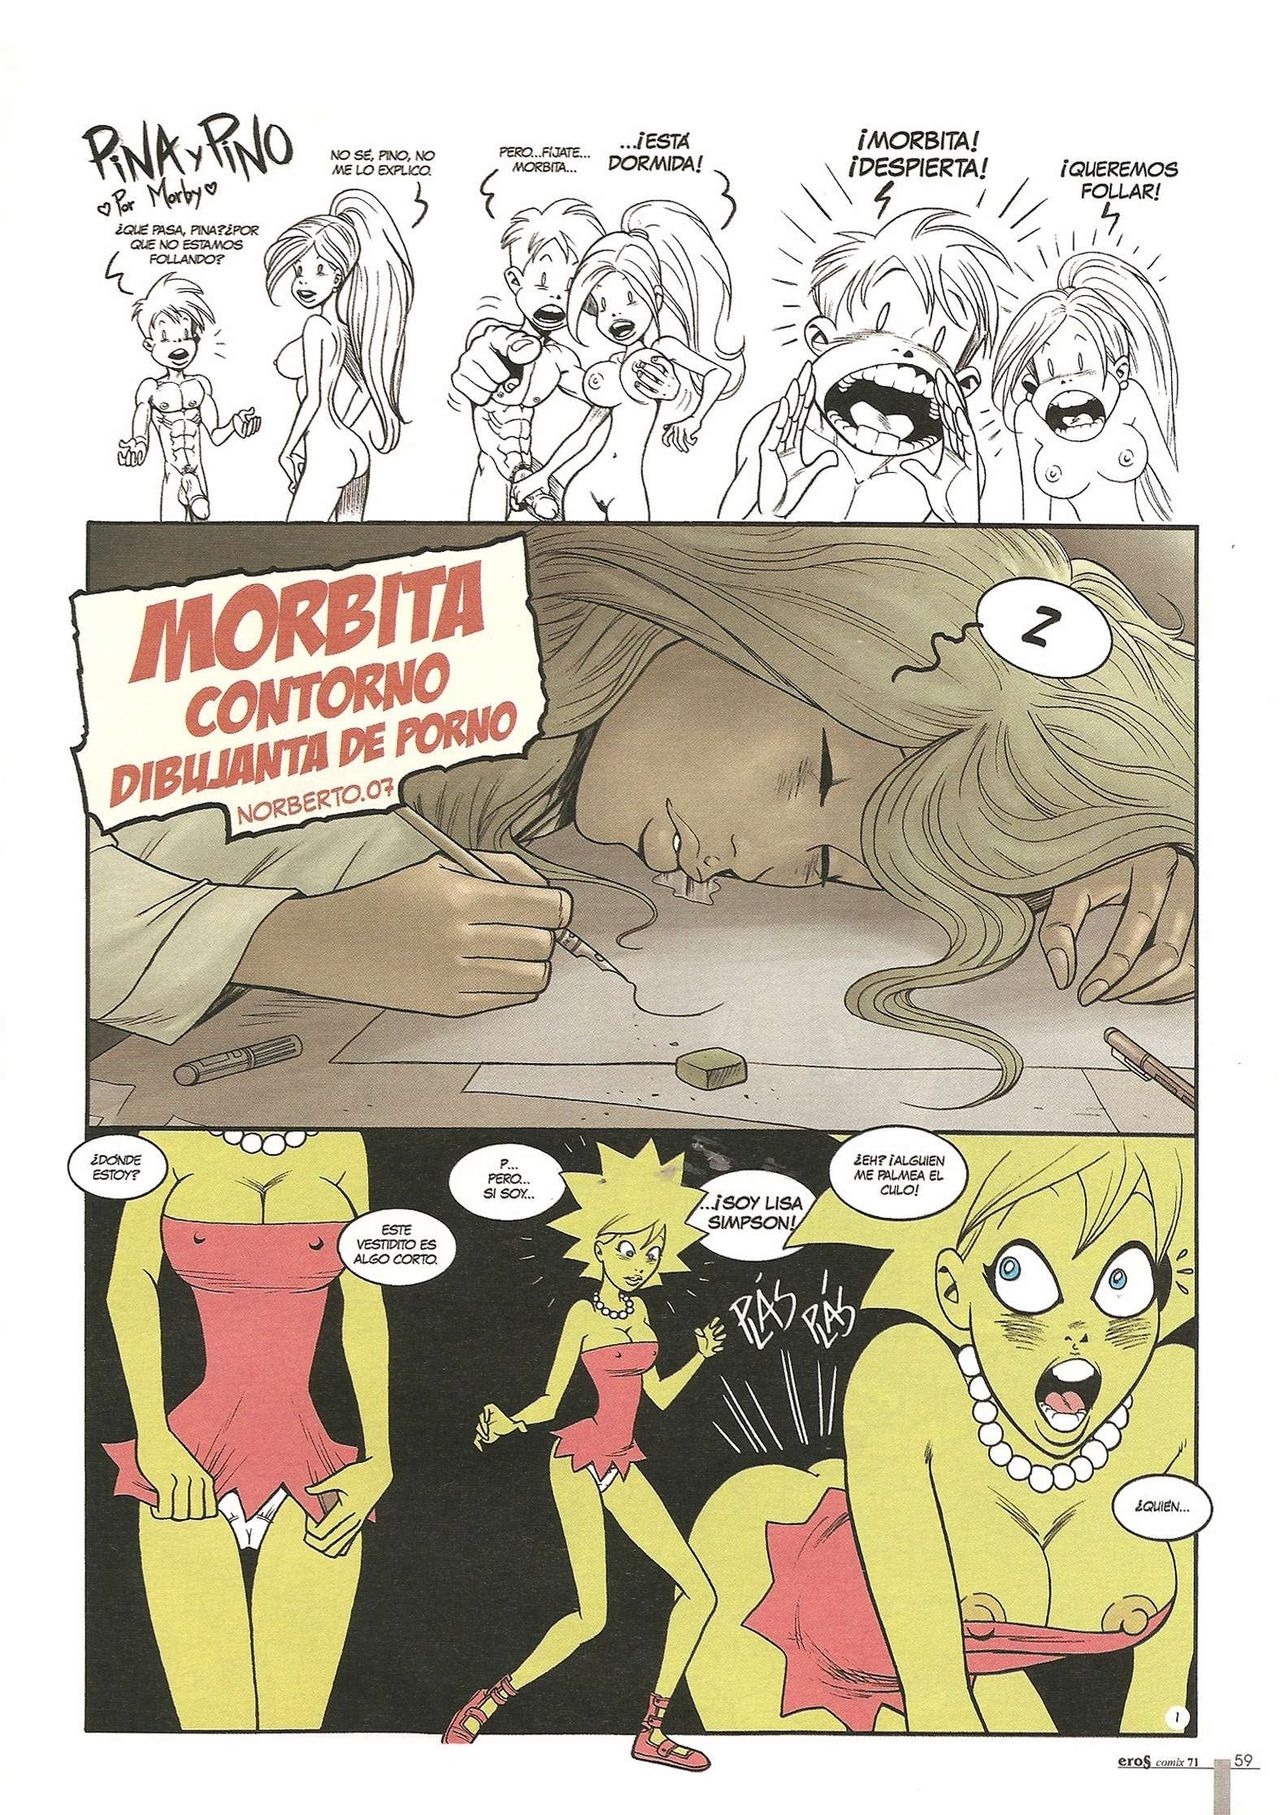 [Norberto Fernández] Morbita Contorno, dibujanta de porno [Spanish] 30